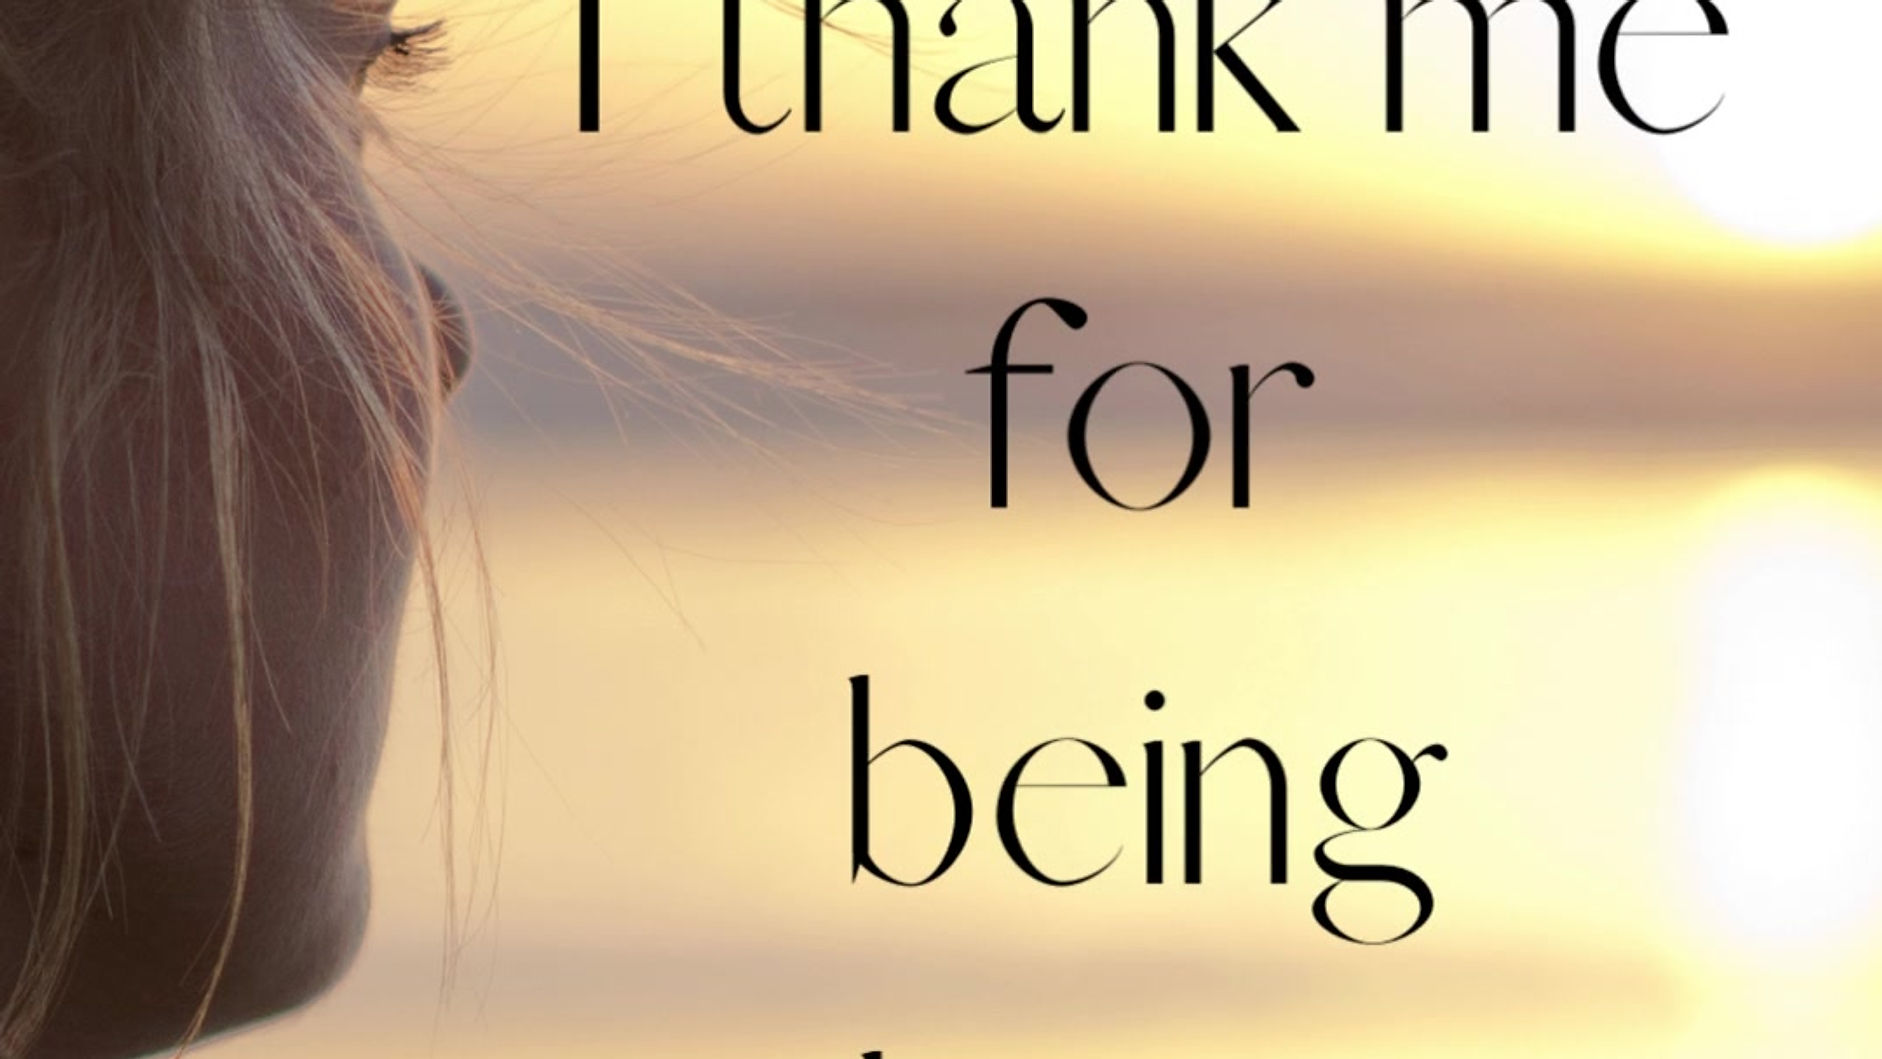 I thank me...